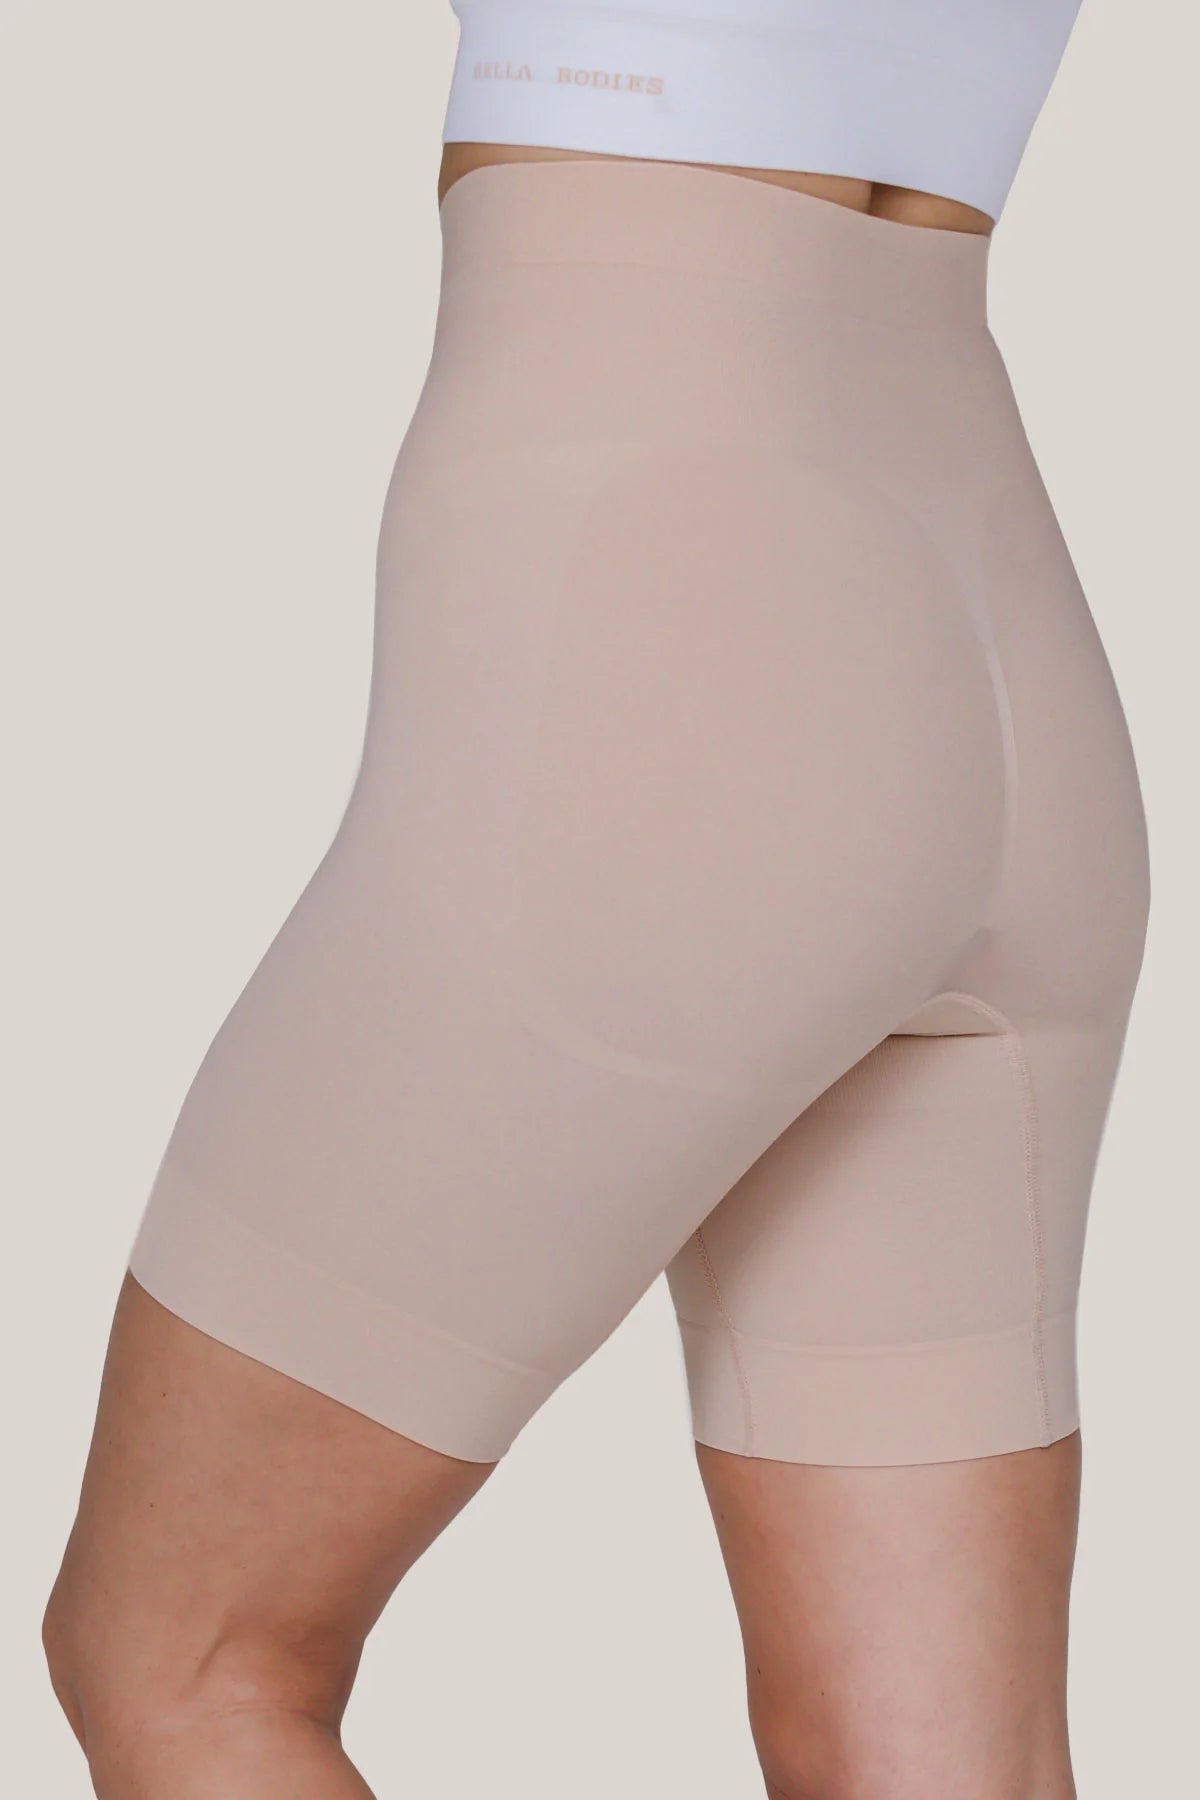 BELLA BODIES Shorts Firming Anti-Chafing Shorts – Latte